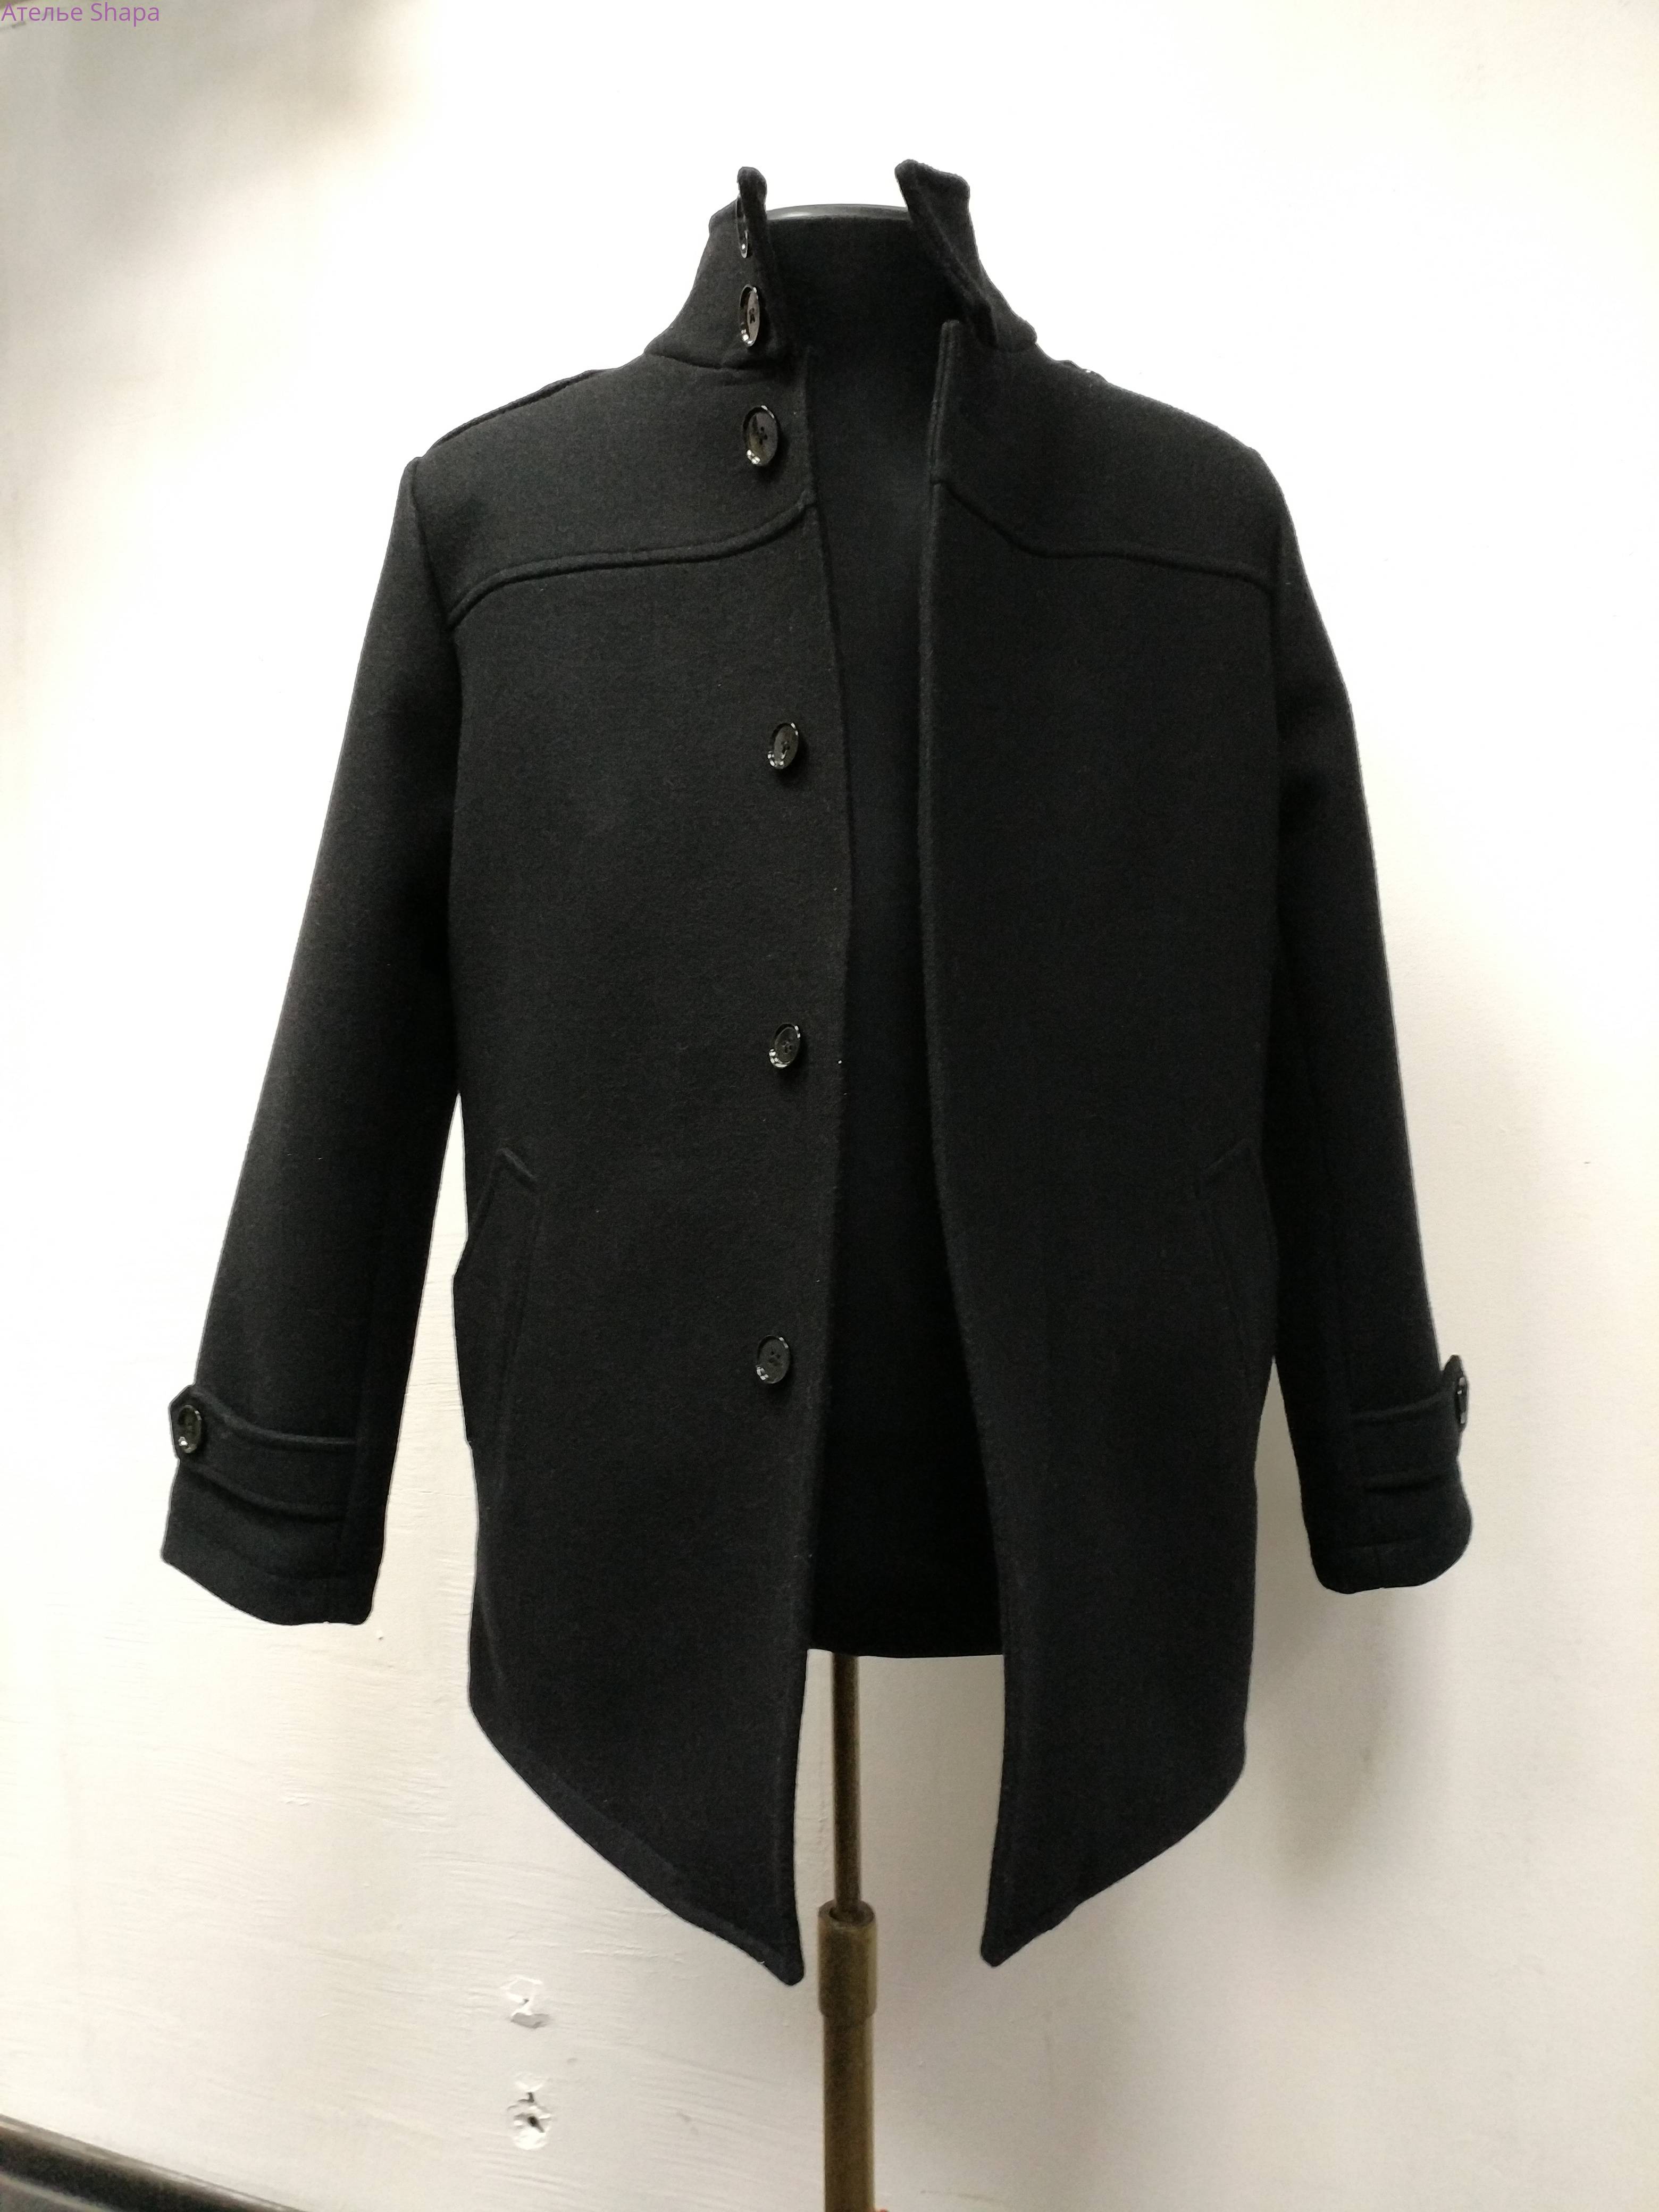 чёрный рукав пальто с застёжкой